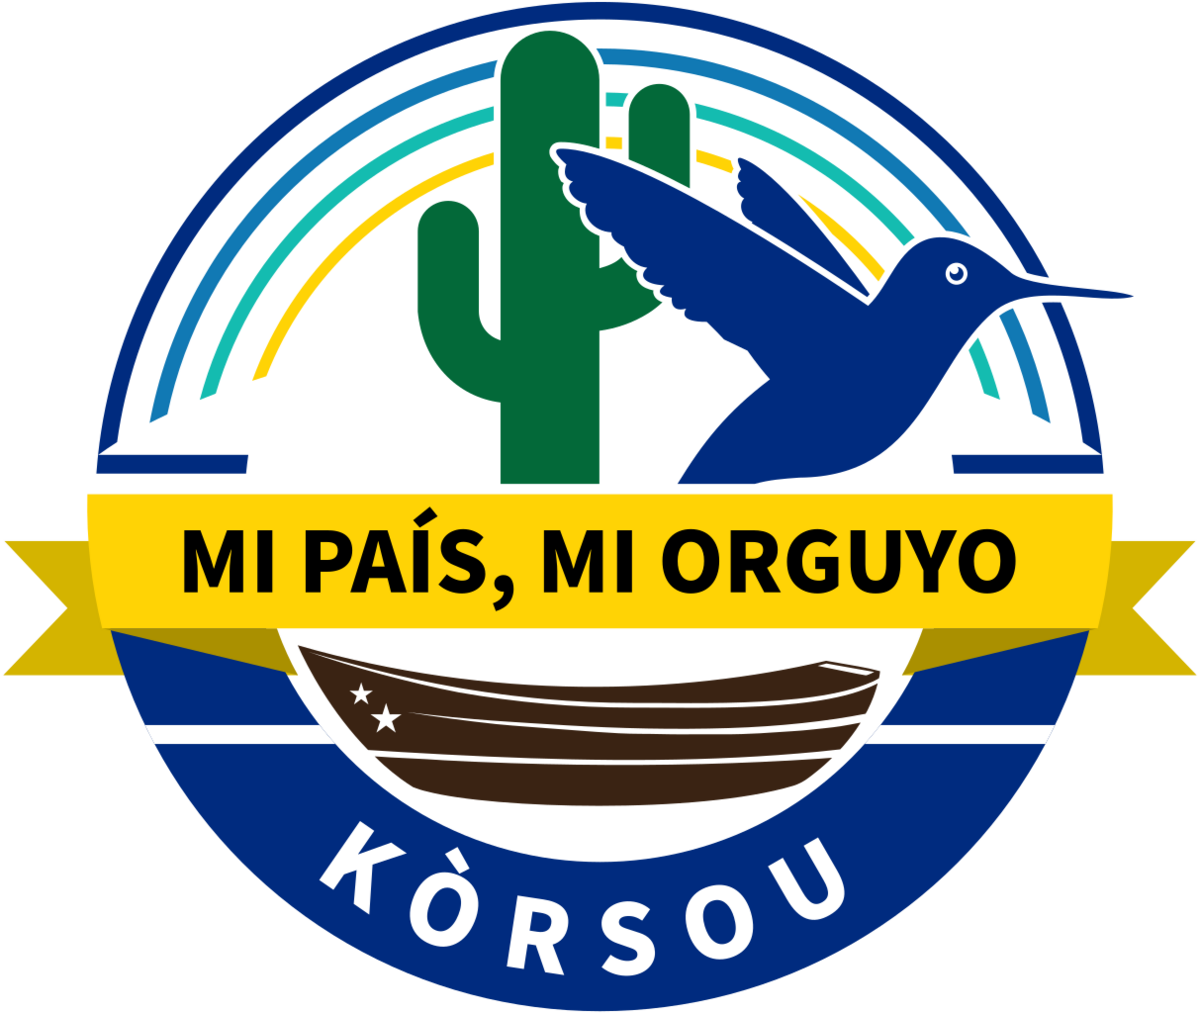 Curaçaos emblem (uoffisielt)